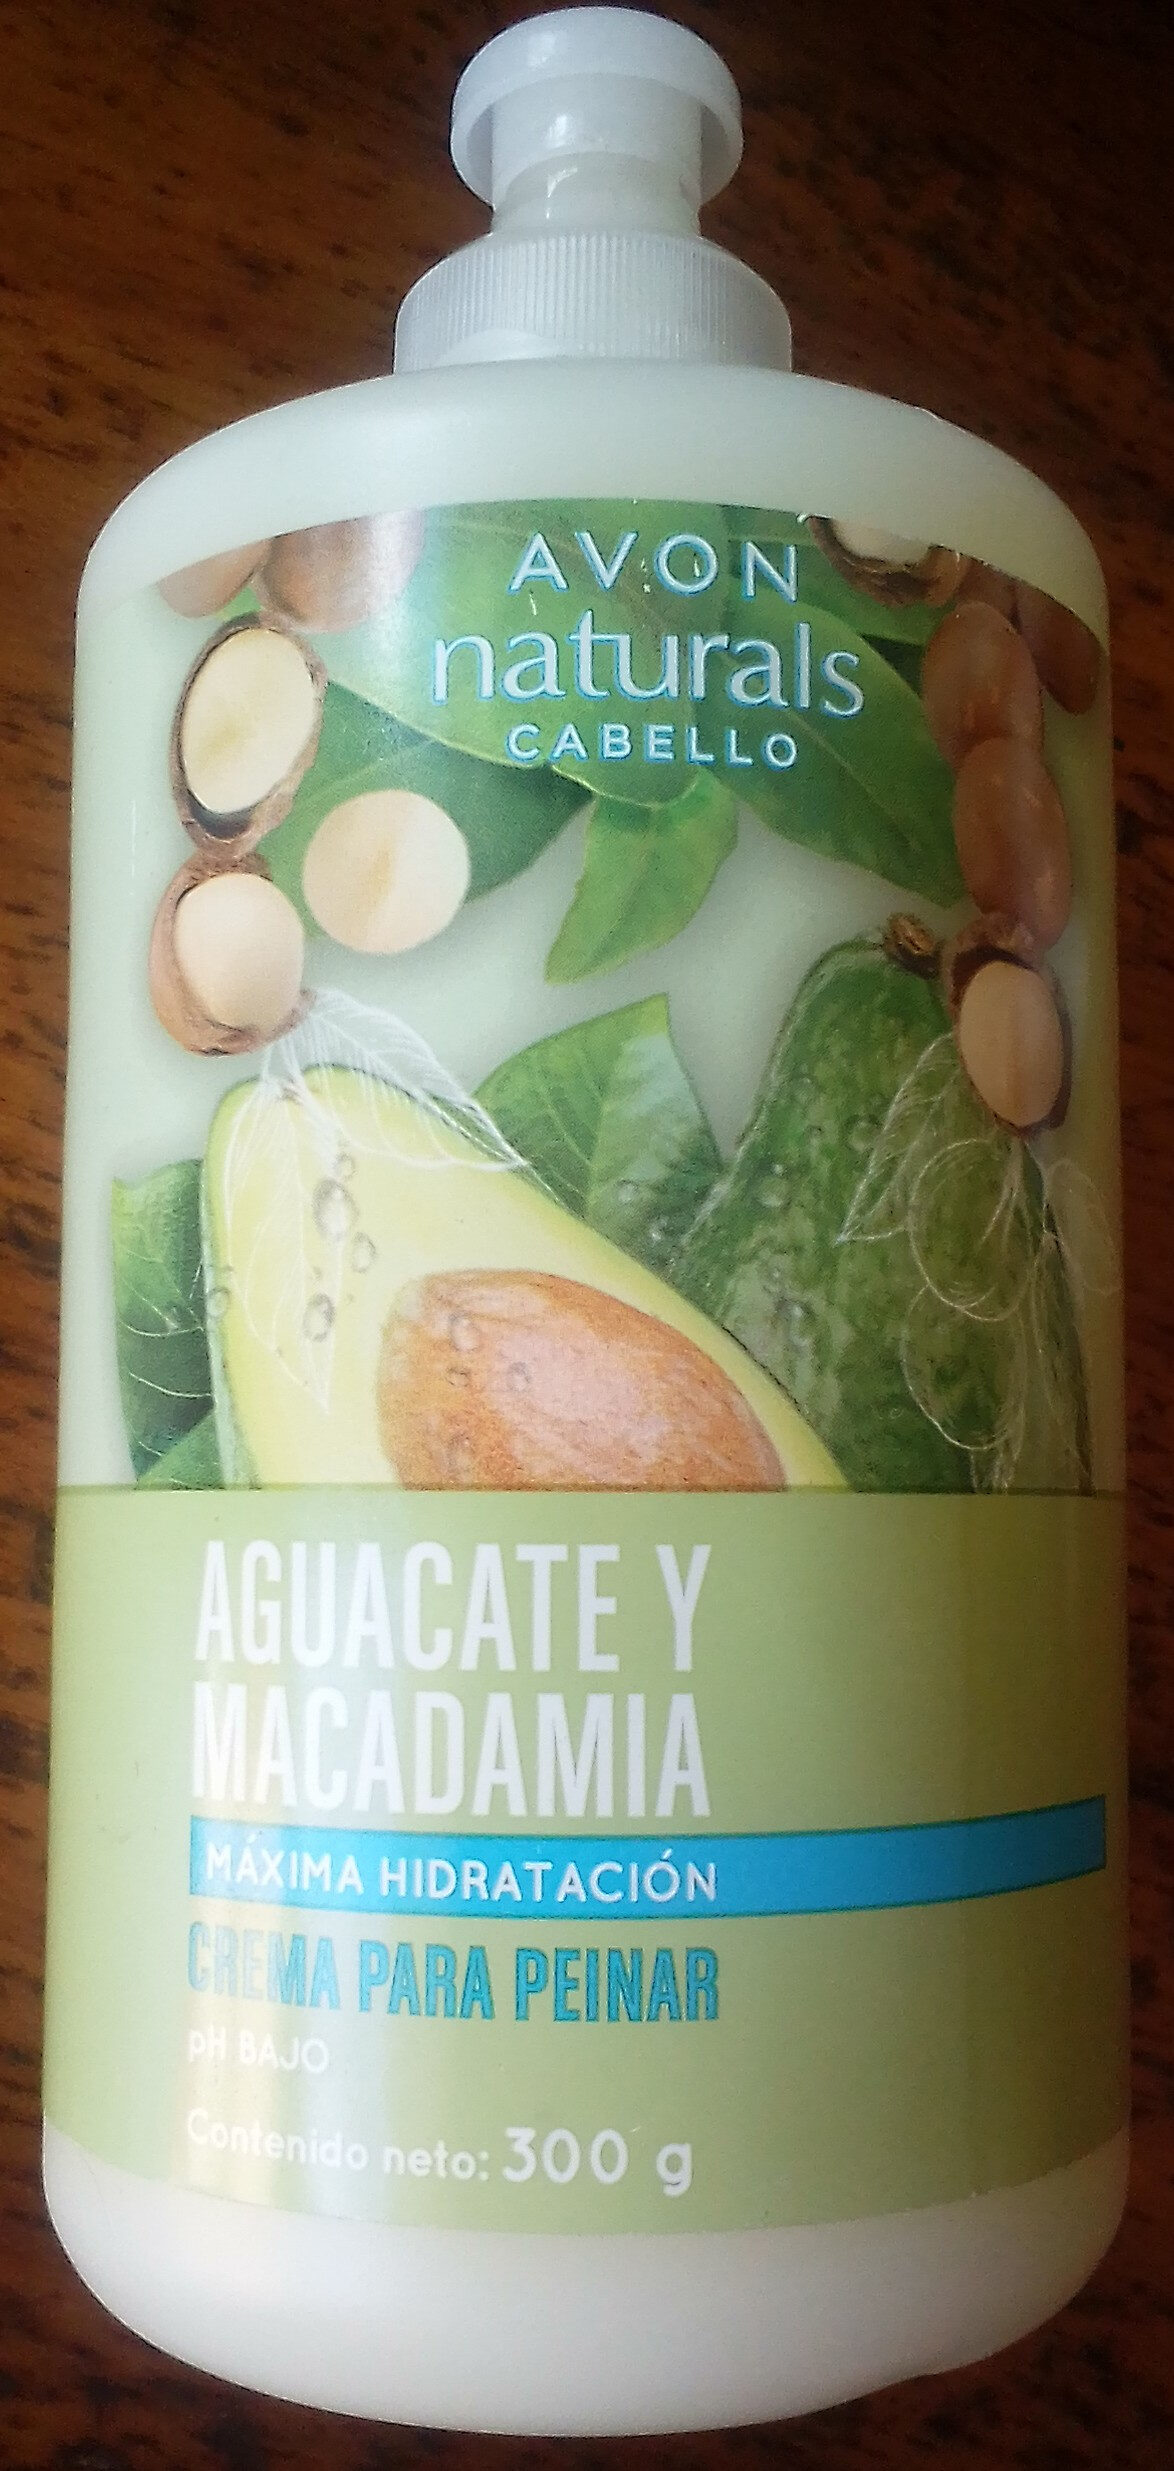 Avon Naturales Cabello Aguacate y Macadamia Maxima Hidratación Crema para Peinar - Produit - en